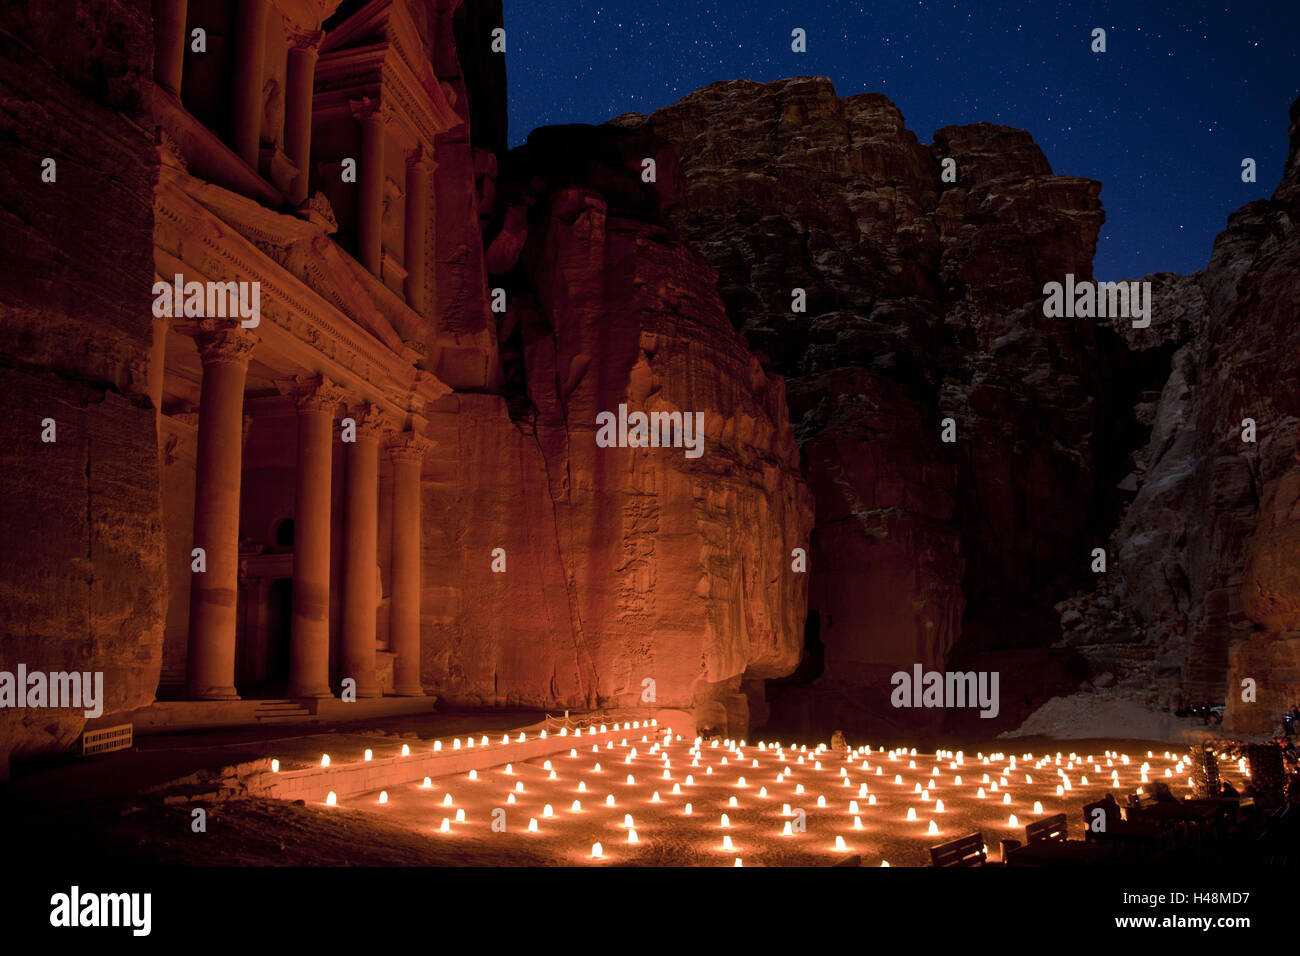 Jordan, historical archaeological city Petra, the Siq, Entrance to the rock town, view at Khazne al-Firaun, treasure house of the Pharaoh, by night, lights, illuminated, Stock Photo